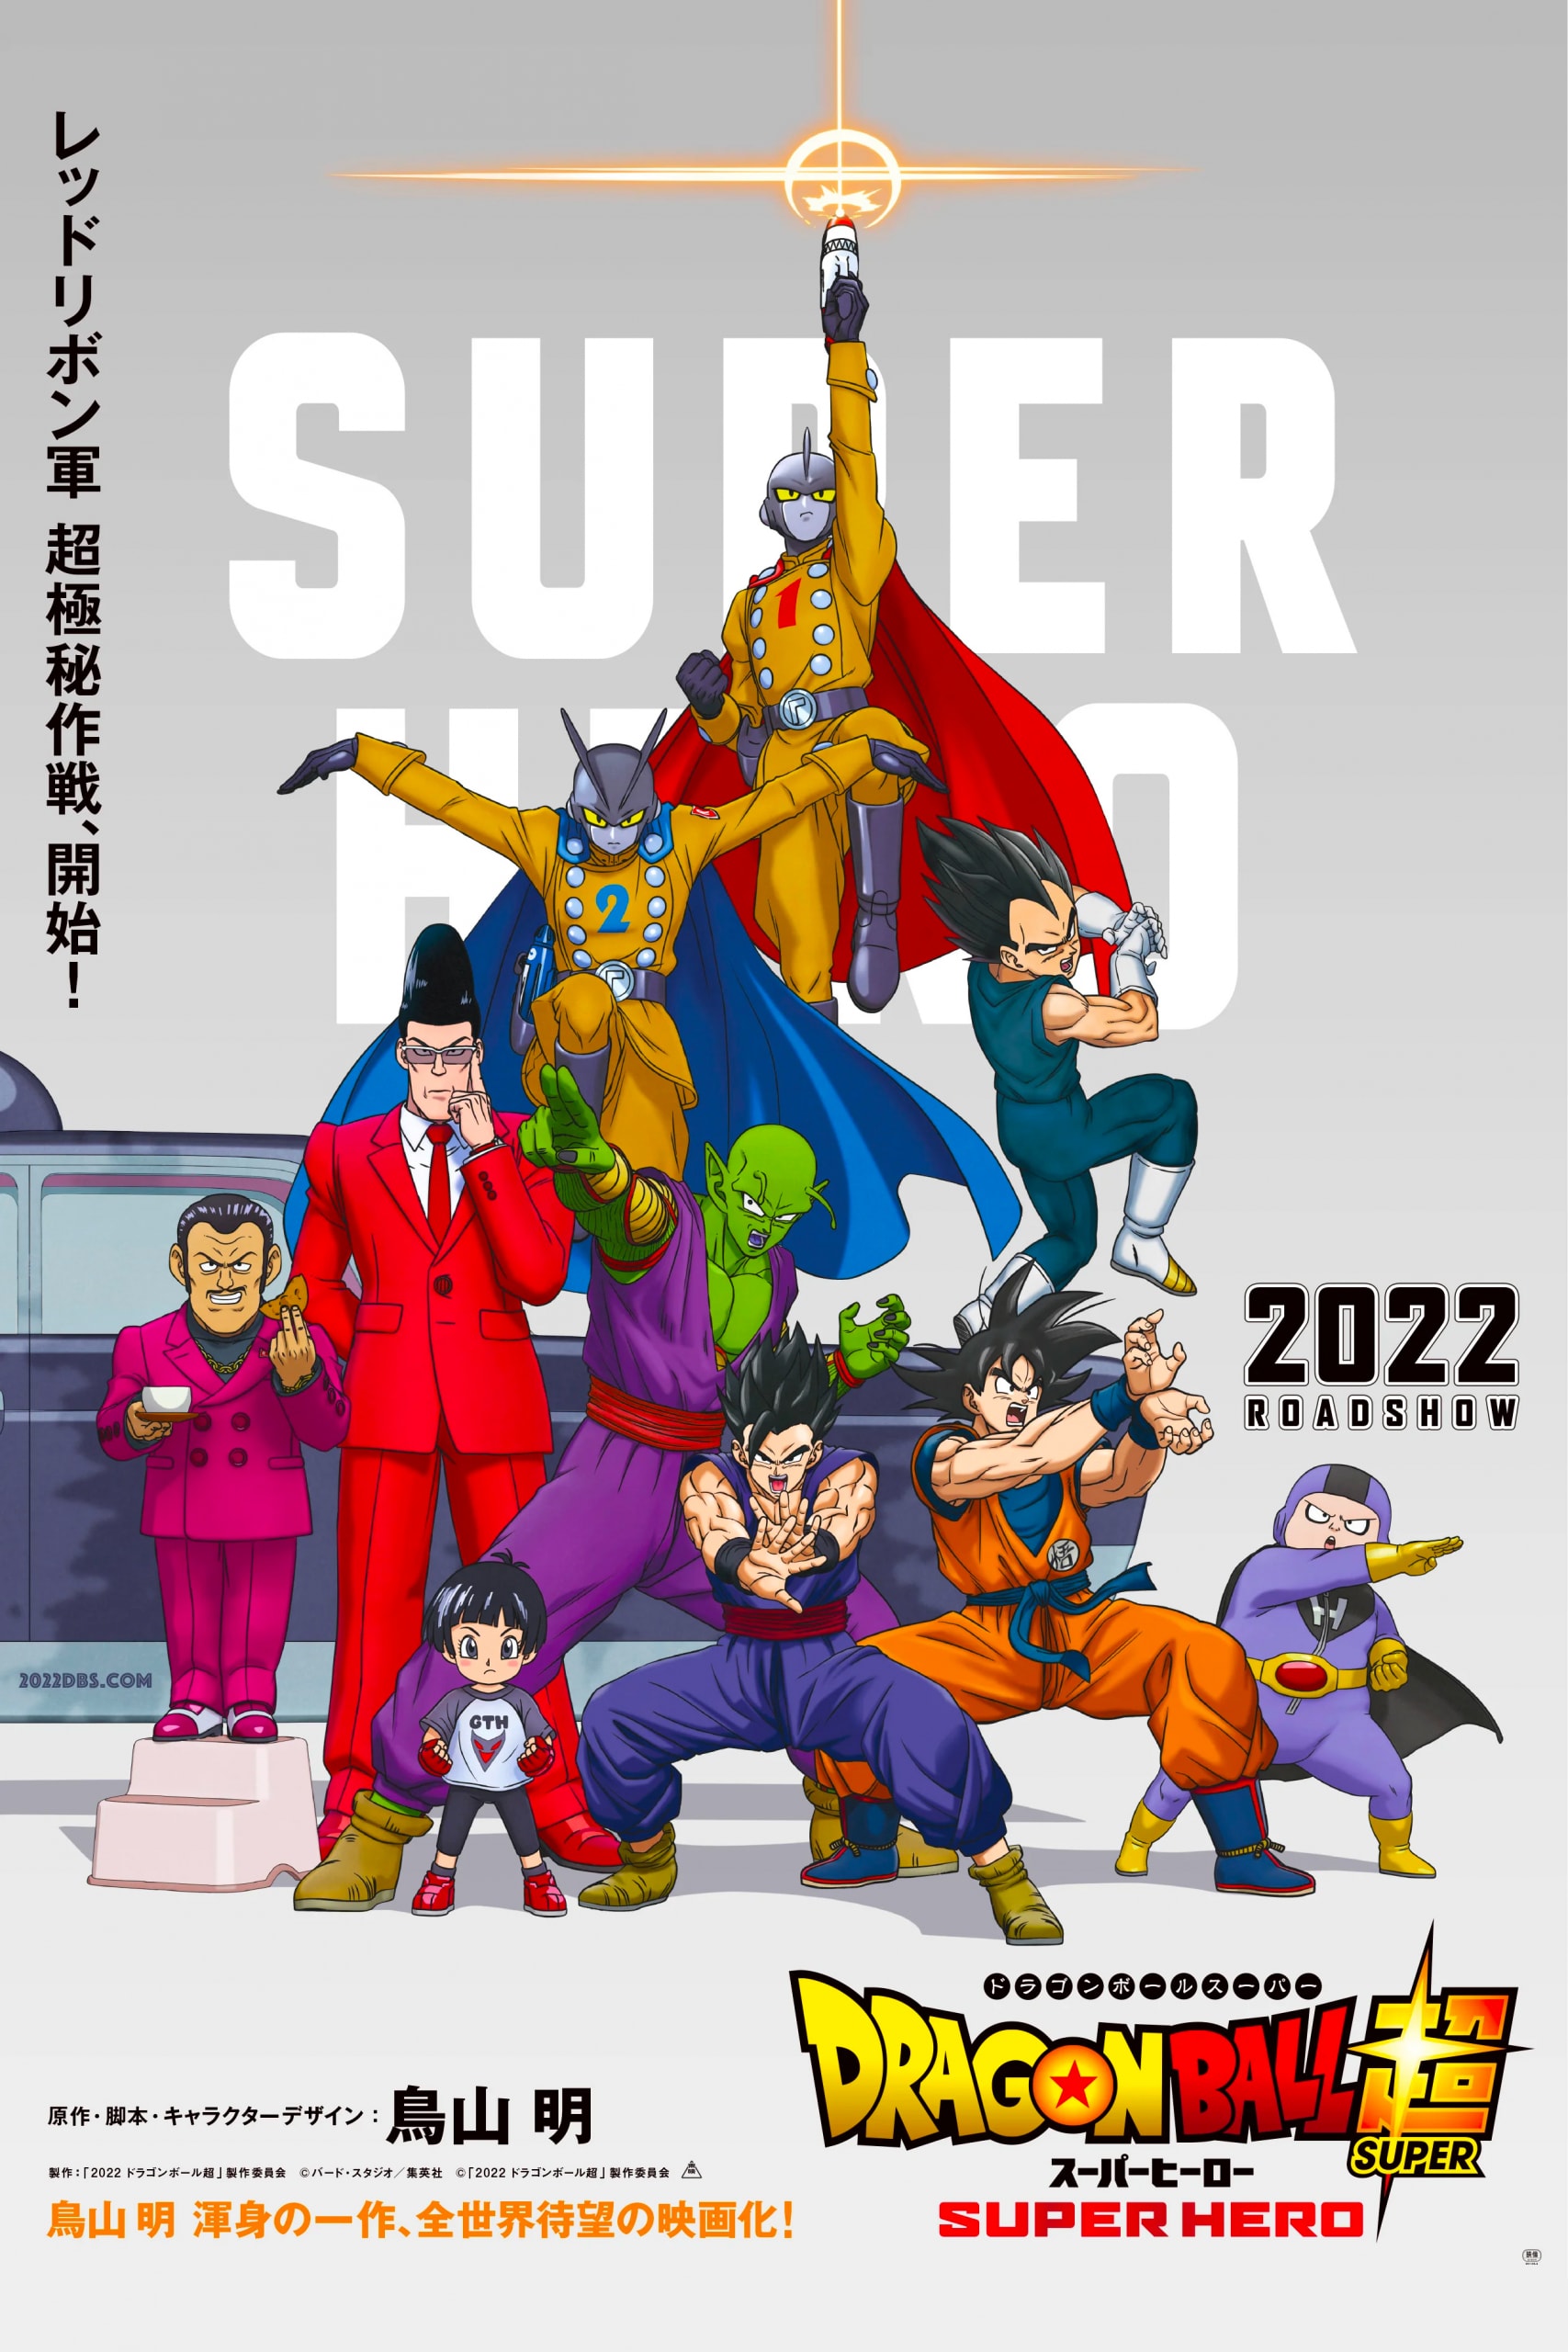 Dragon Ball Super: Super Hero' Film New Visual